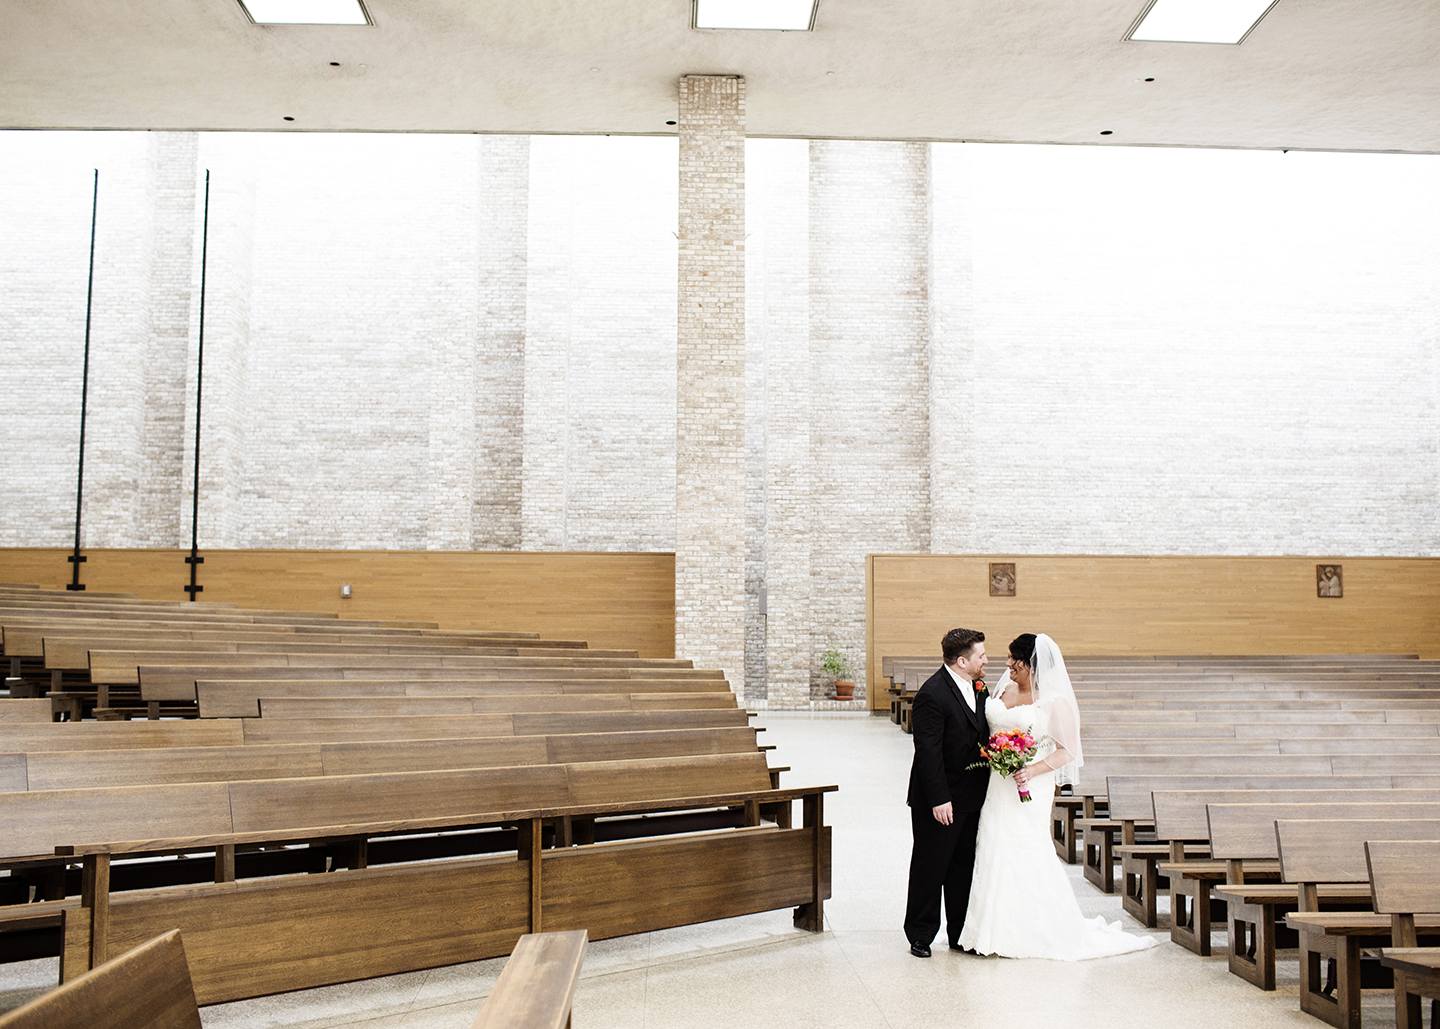 St. John the Baptist Catholic Church Wedding | Wedding Photographer | Photogen Inc. | Eliesa Johnson | Based in Minneapolis, Minnesota